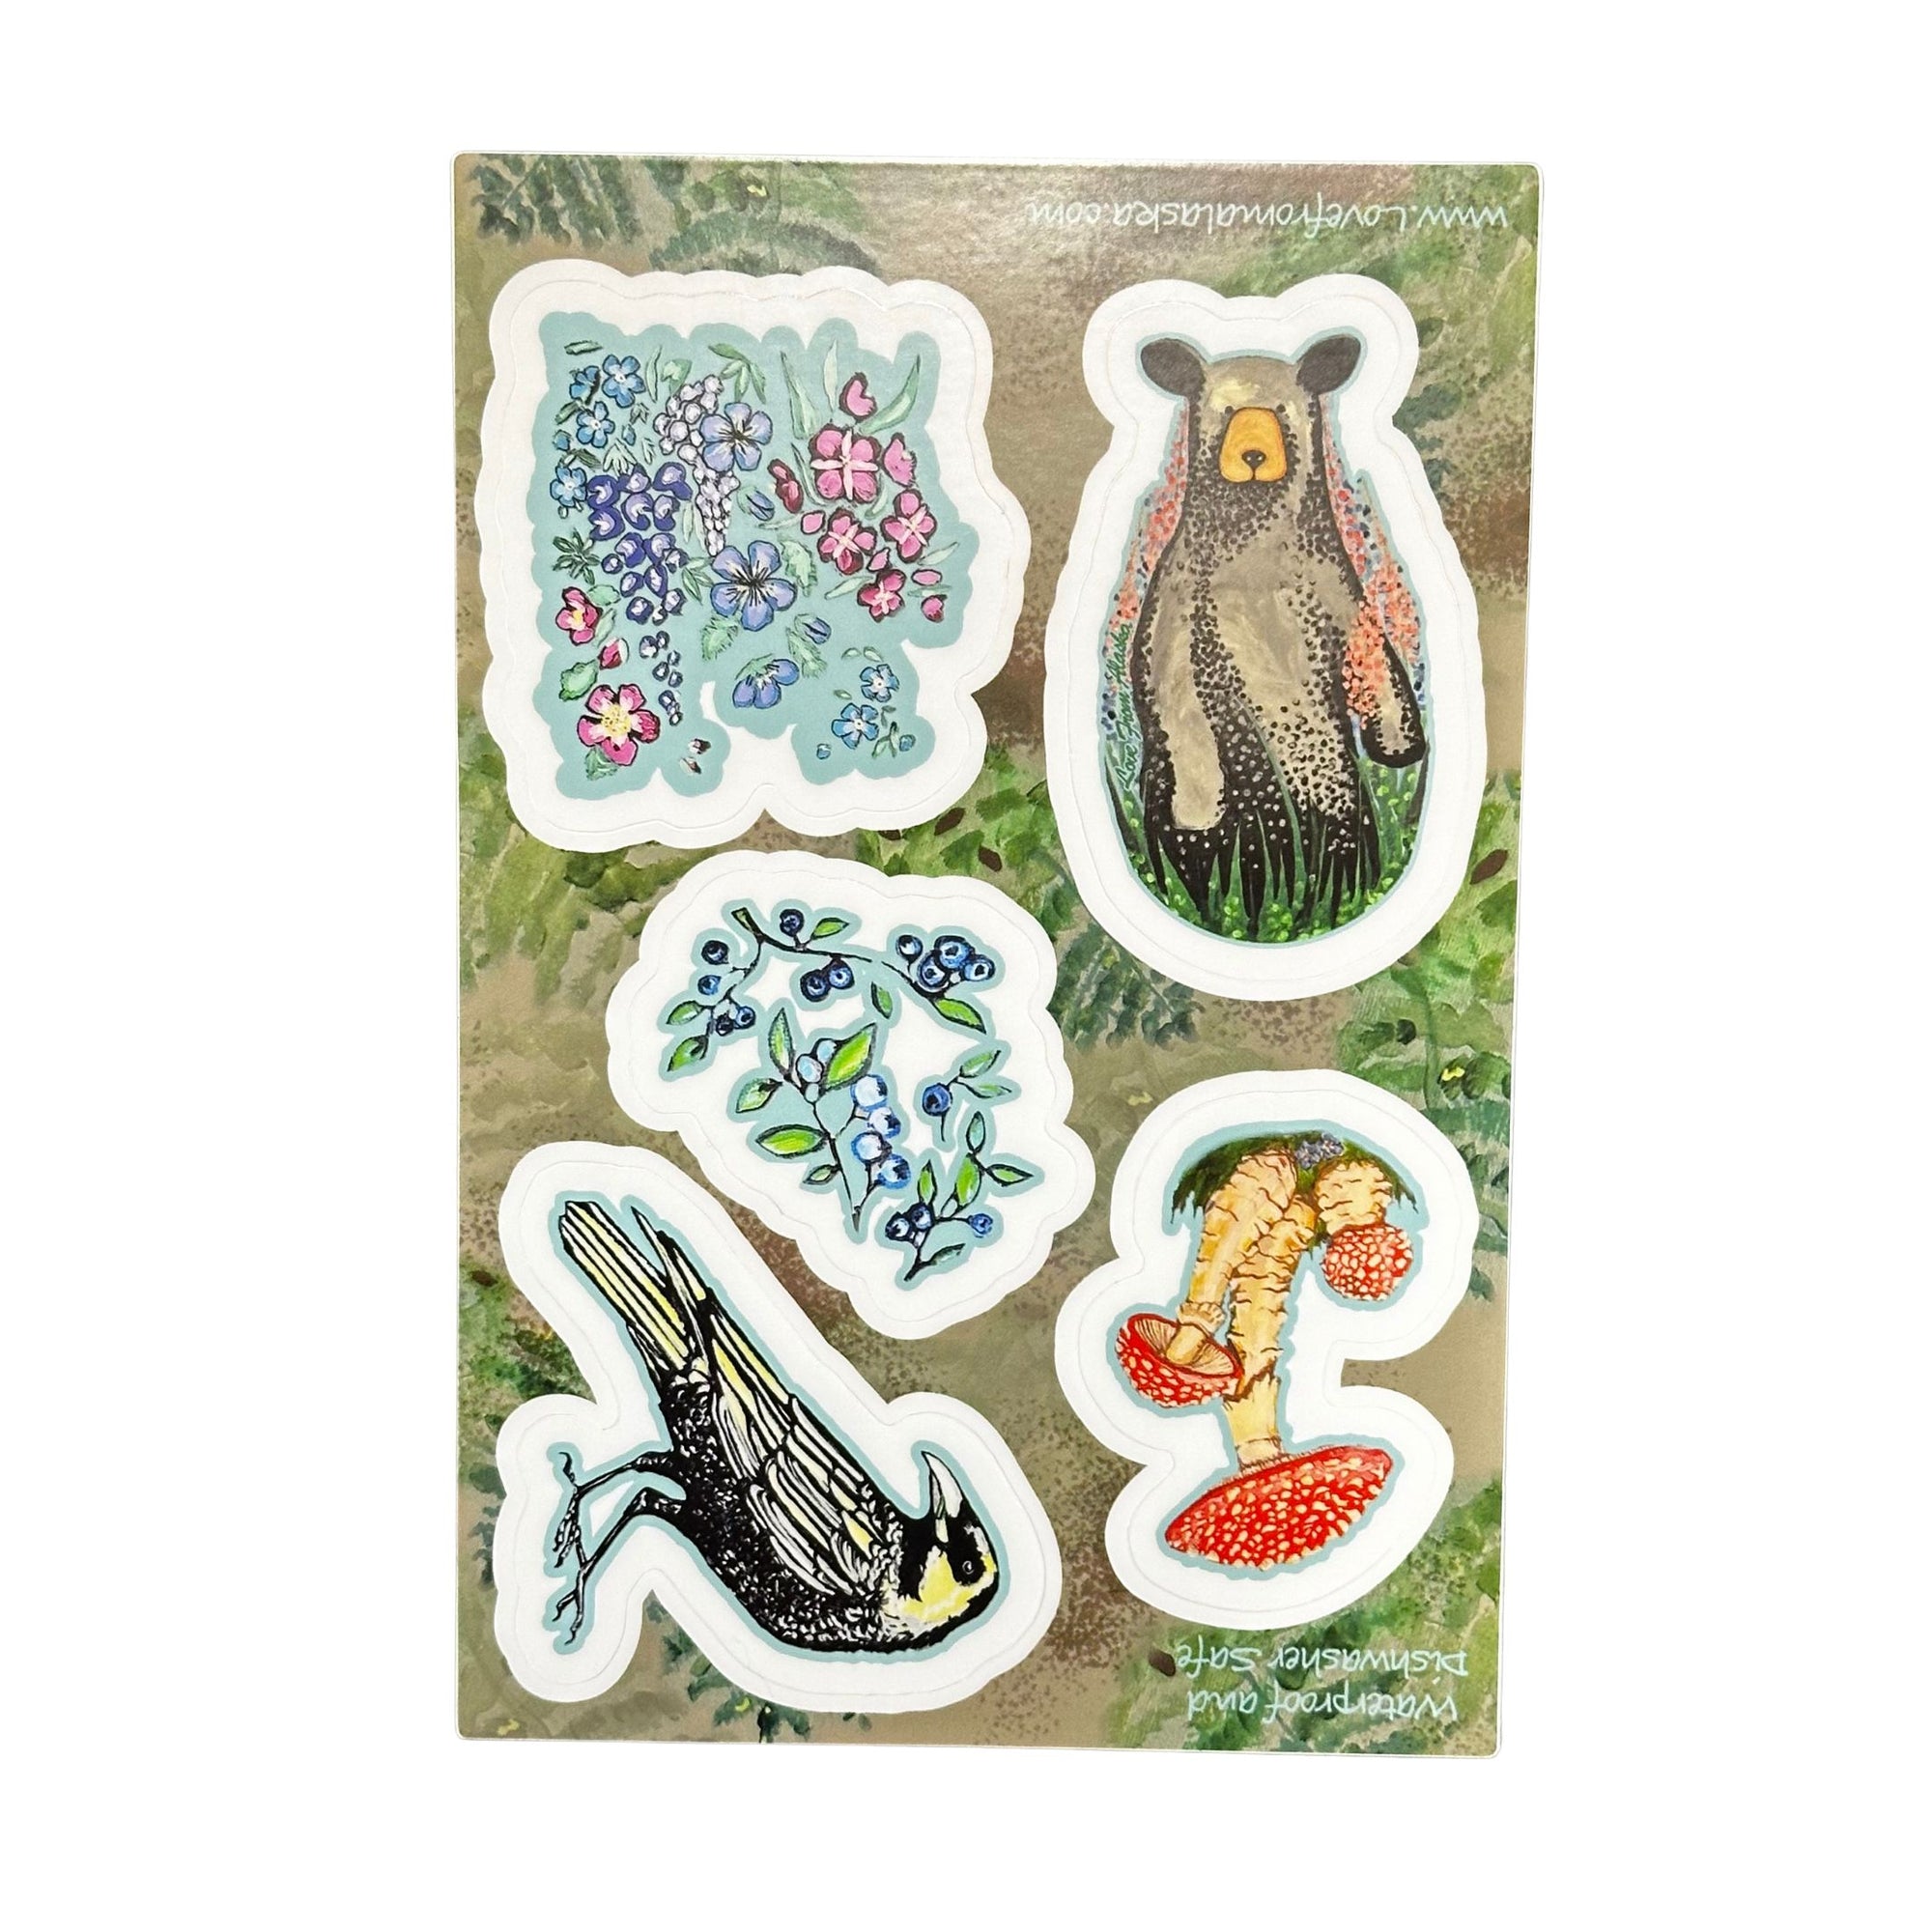 Bear Crow Mushroom and Berries Sticker Sheet